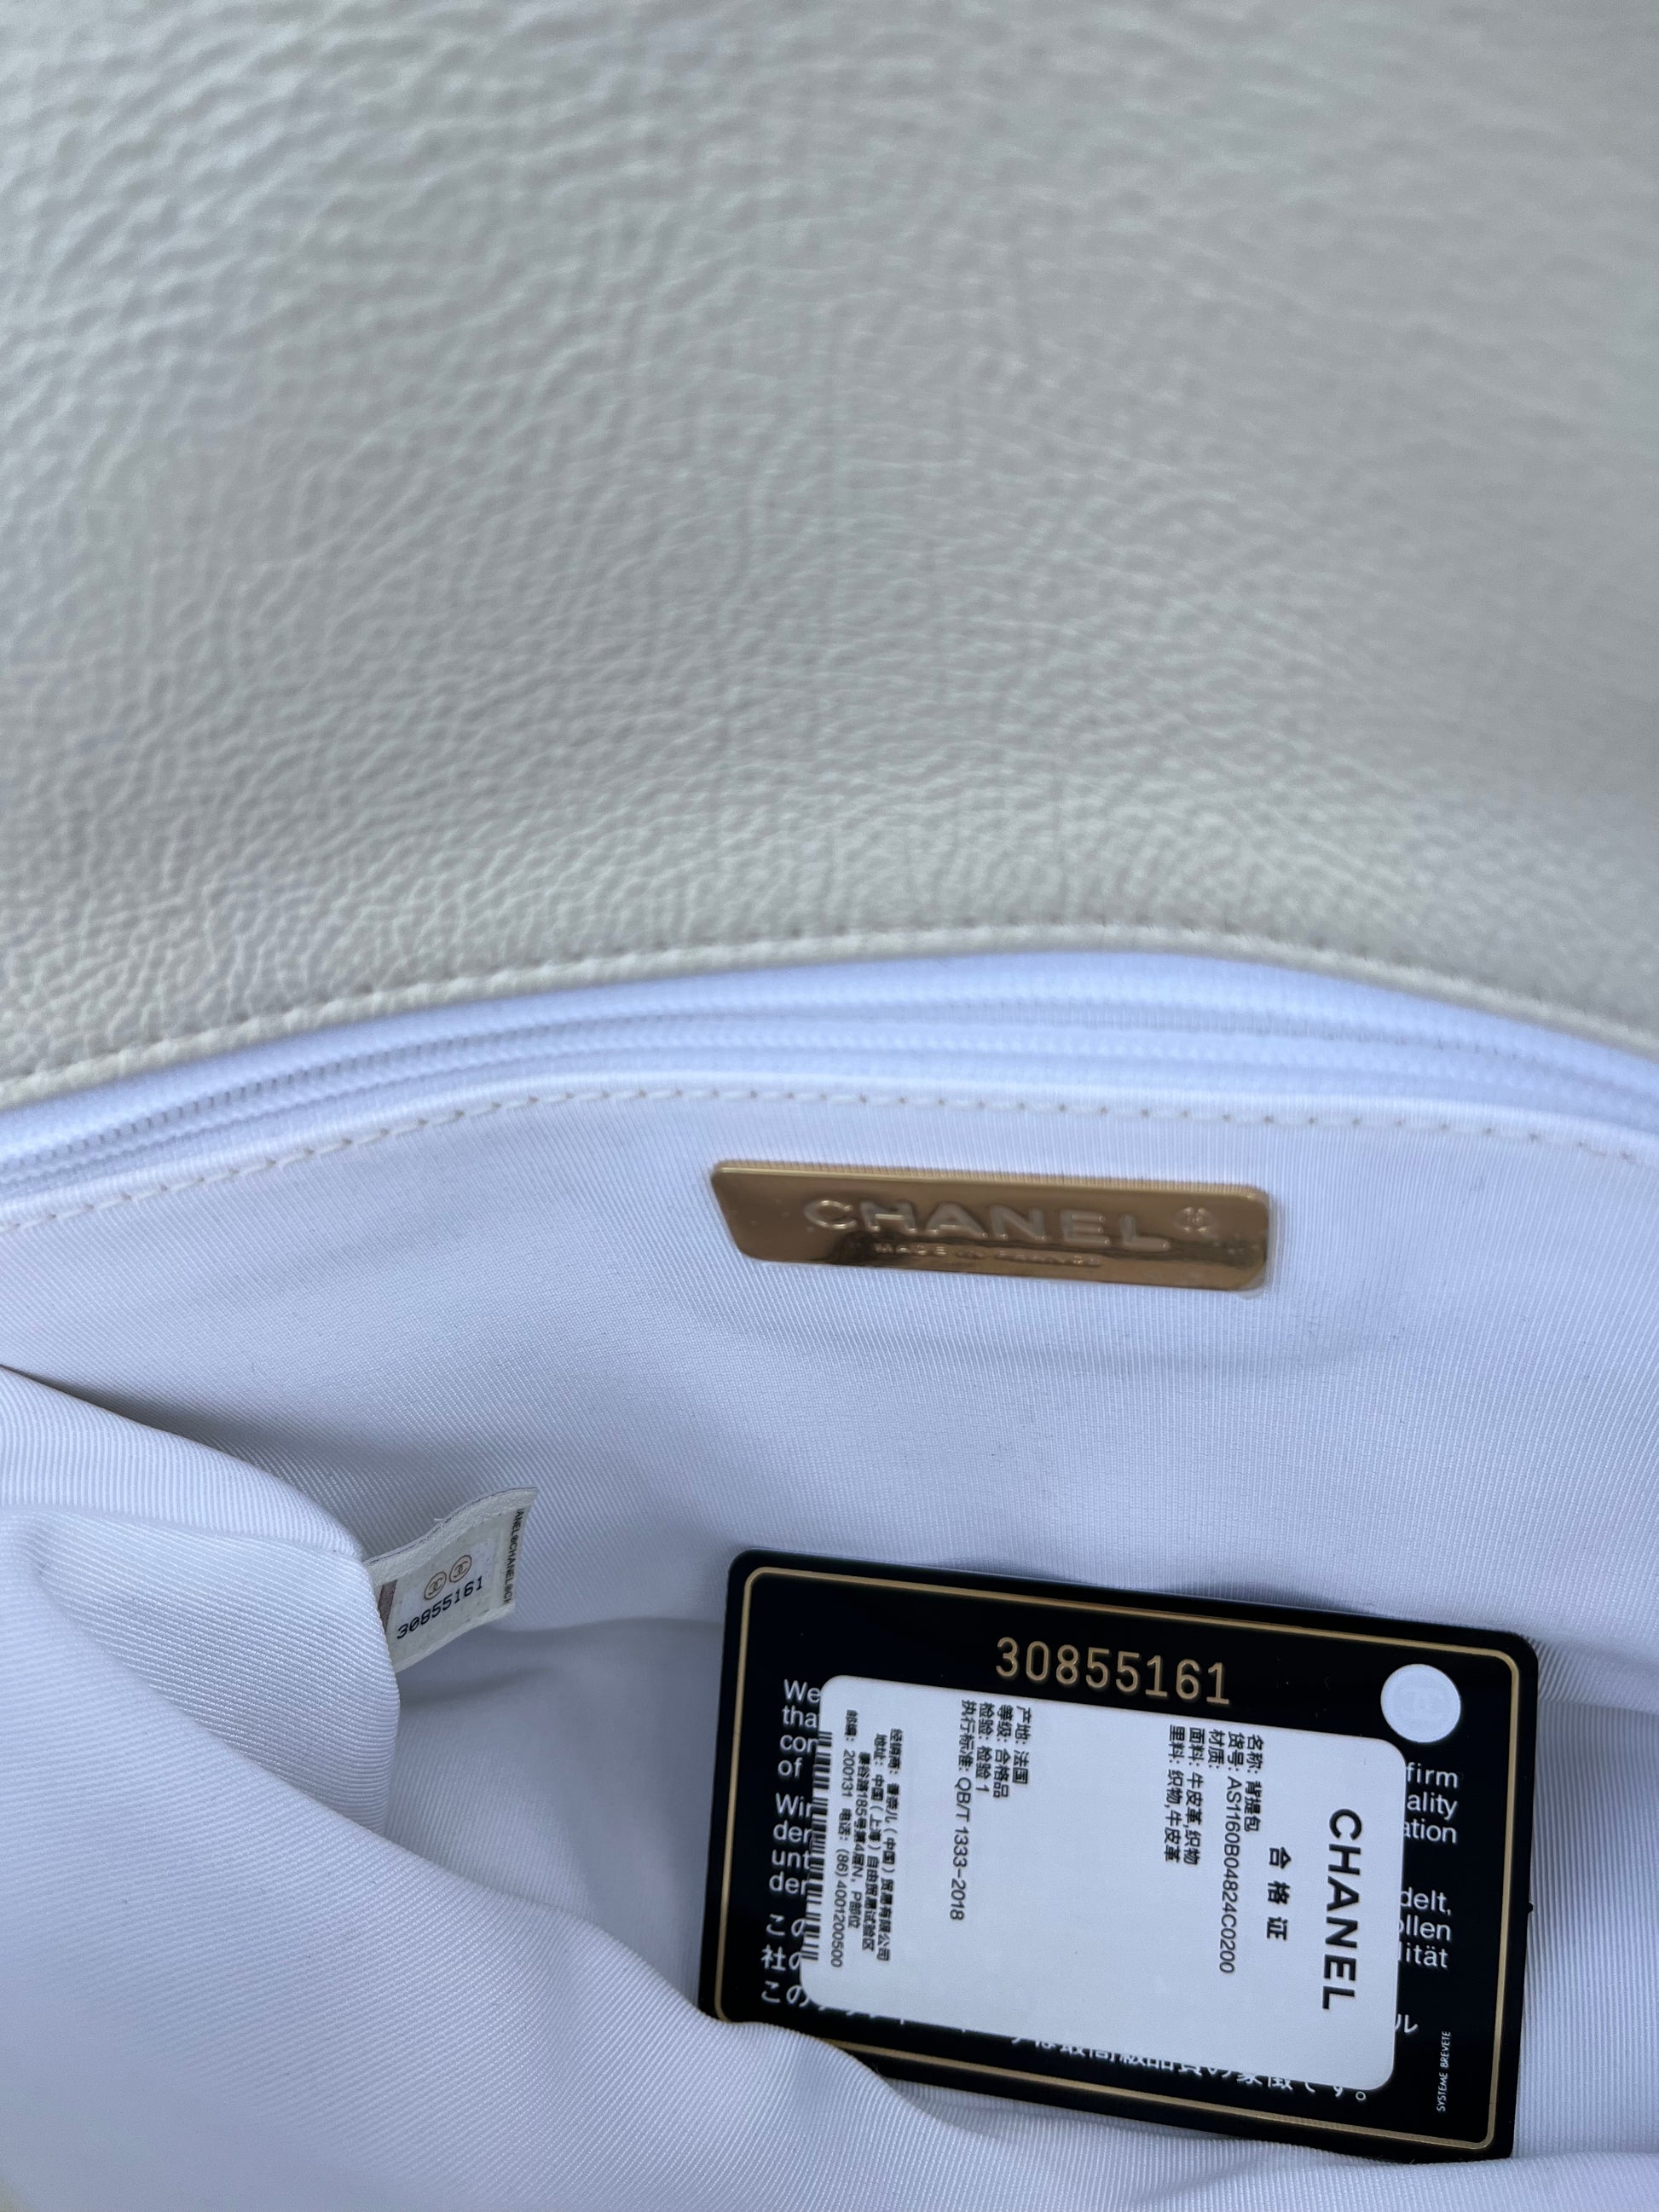 Chanel 19 Medium Crochet Flap Bag | DBLTKE Luxury Consignment Boutique